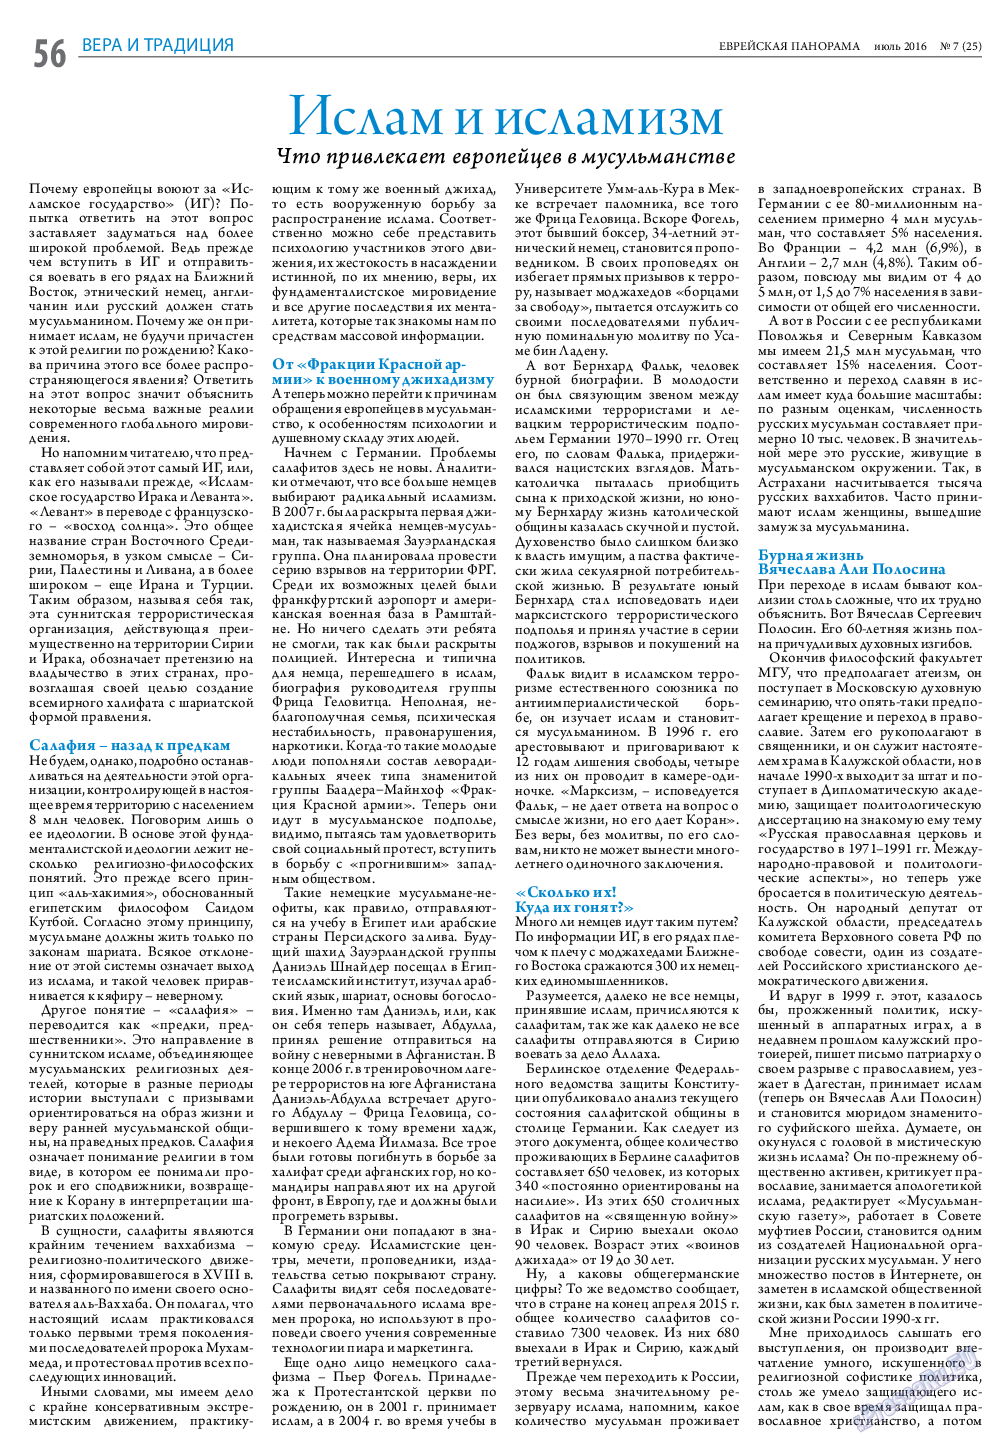 Еврейская панорама, газета. 2016 №7 стр.56